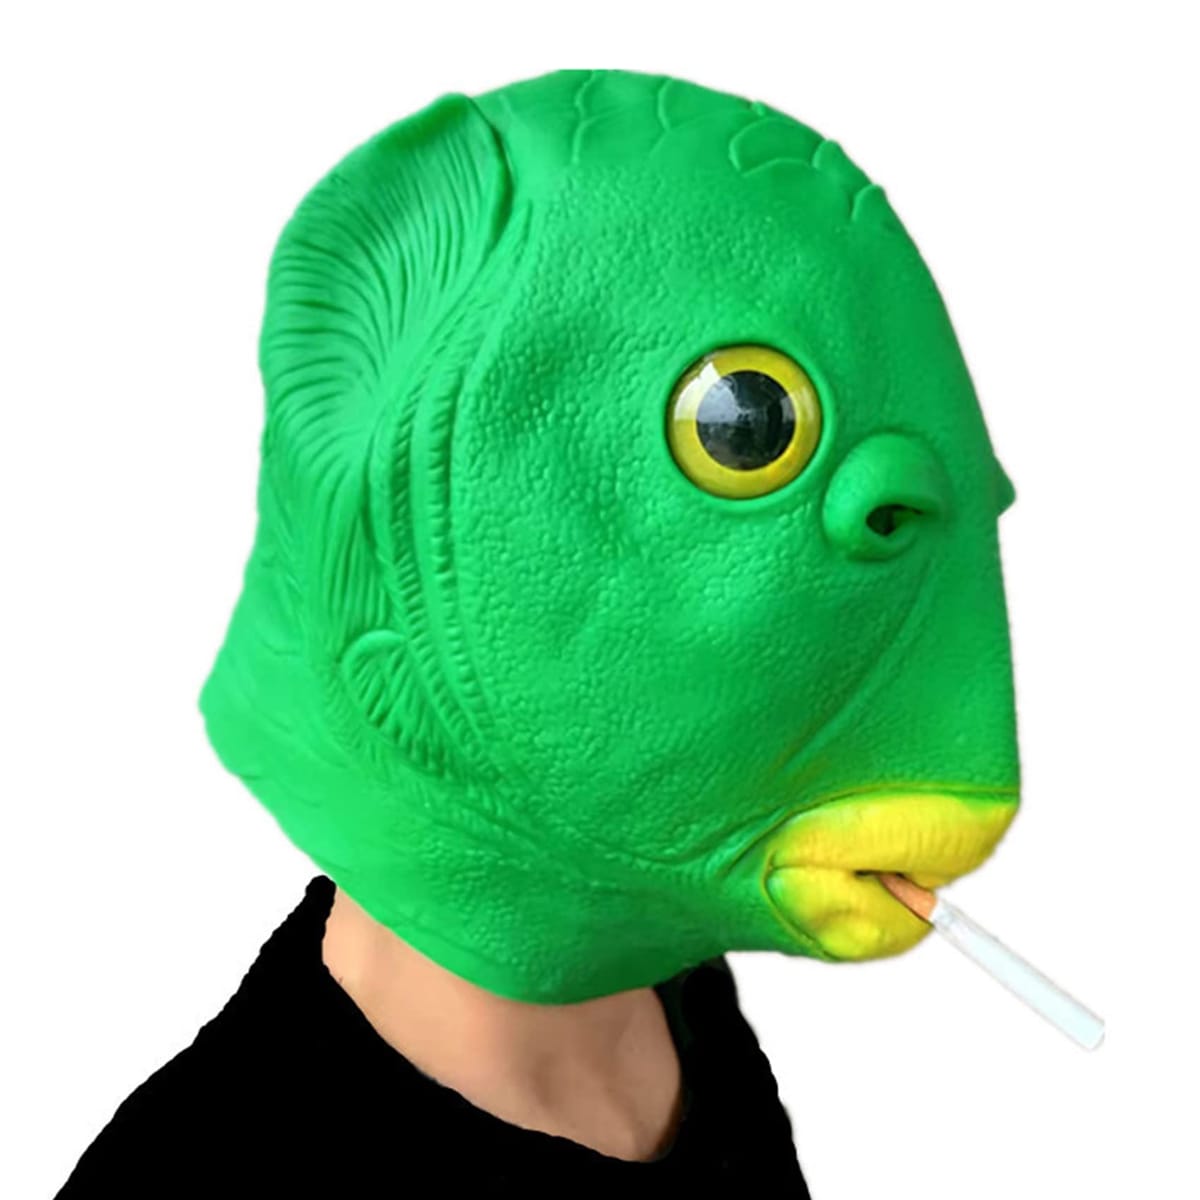 [NOELAMOUR] 半魚人 マスク 被り物 アニマル 面白マスク コスプレ リアル 仮面 お面 どっきり ビックリ